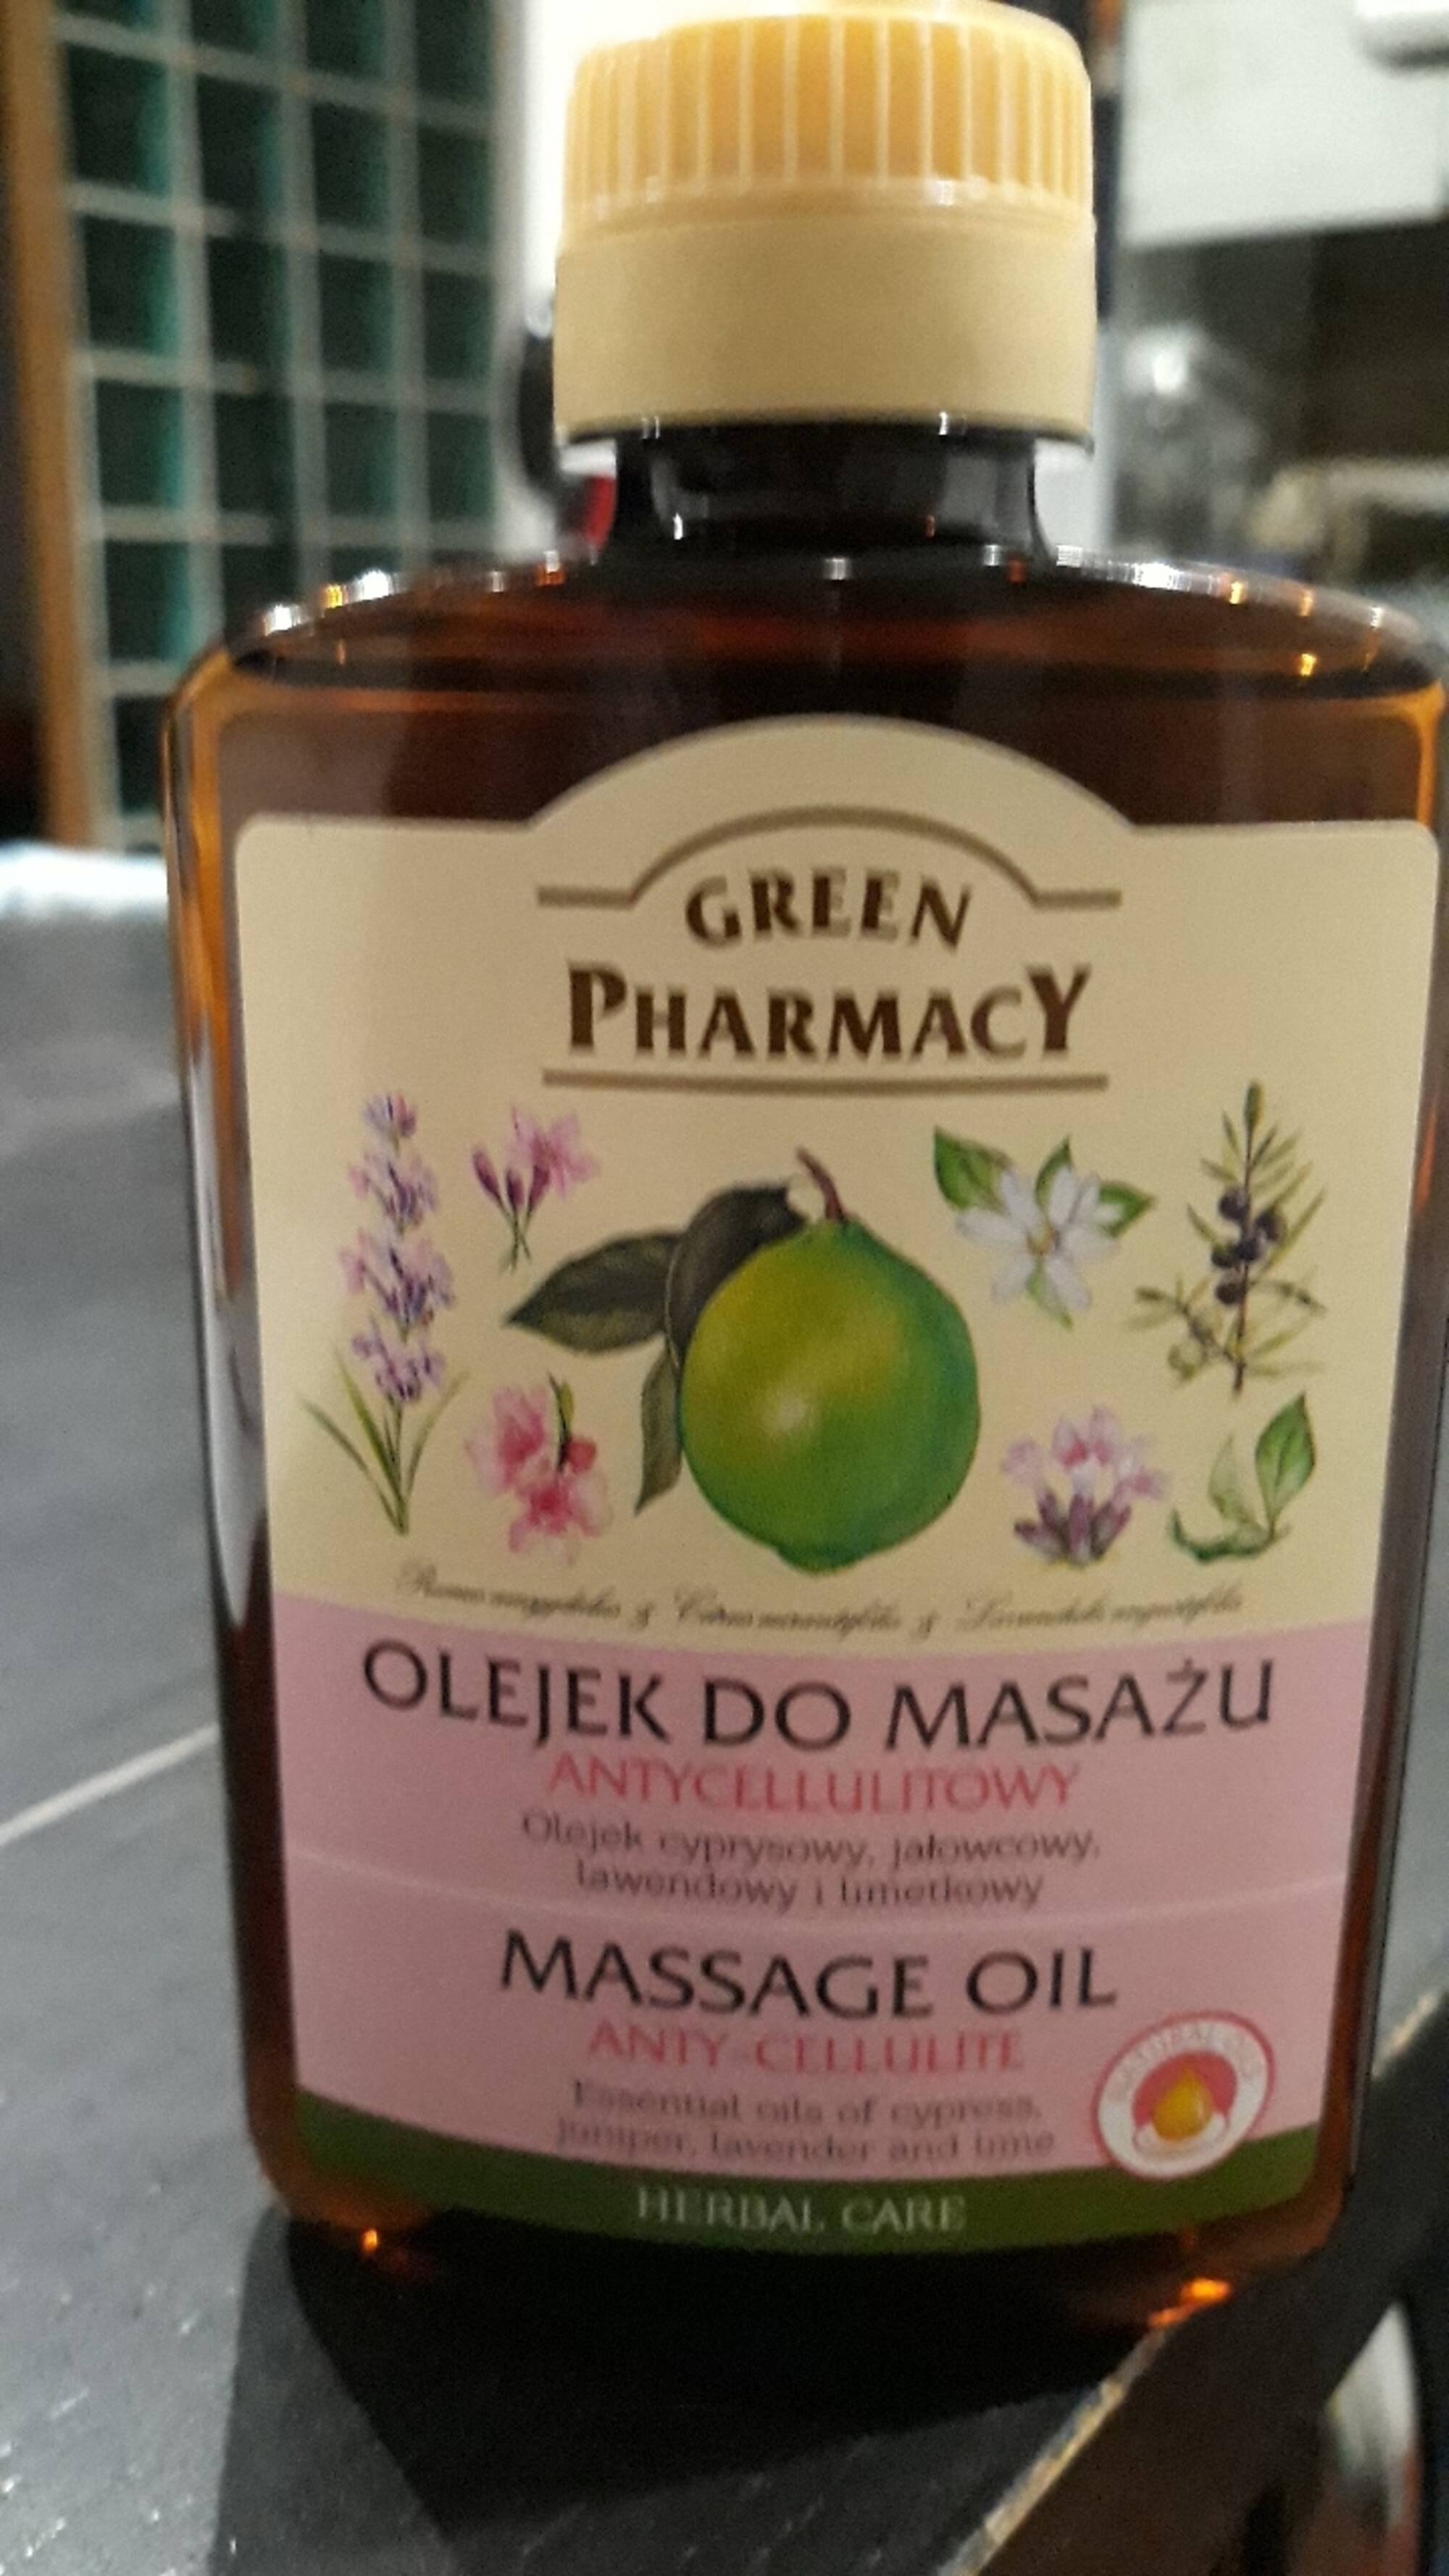 GREEN PHARMACY - Massage oil anti-cellulite